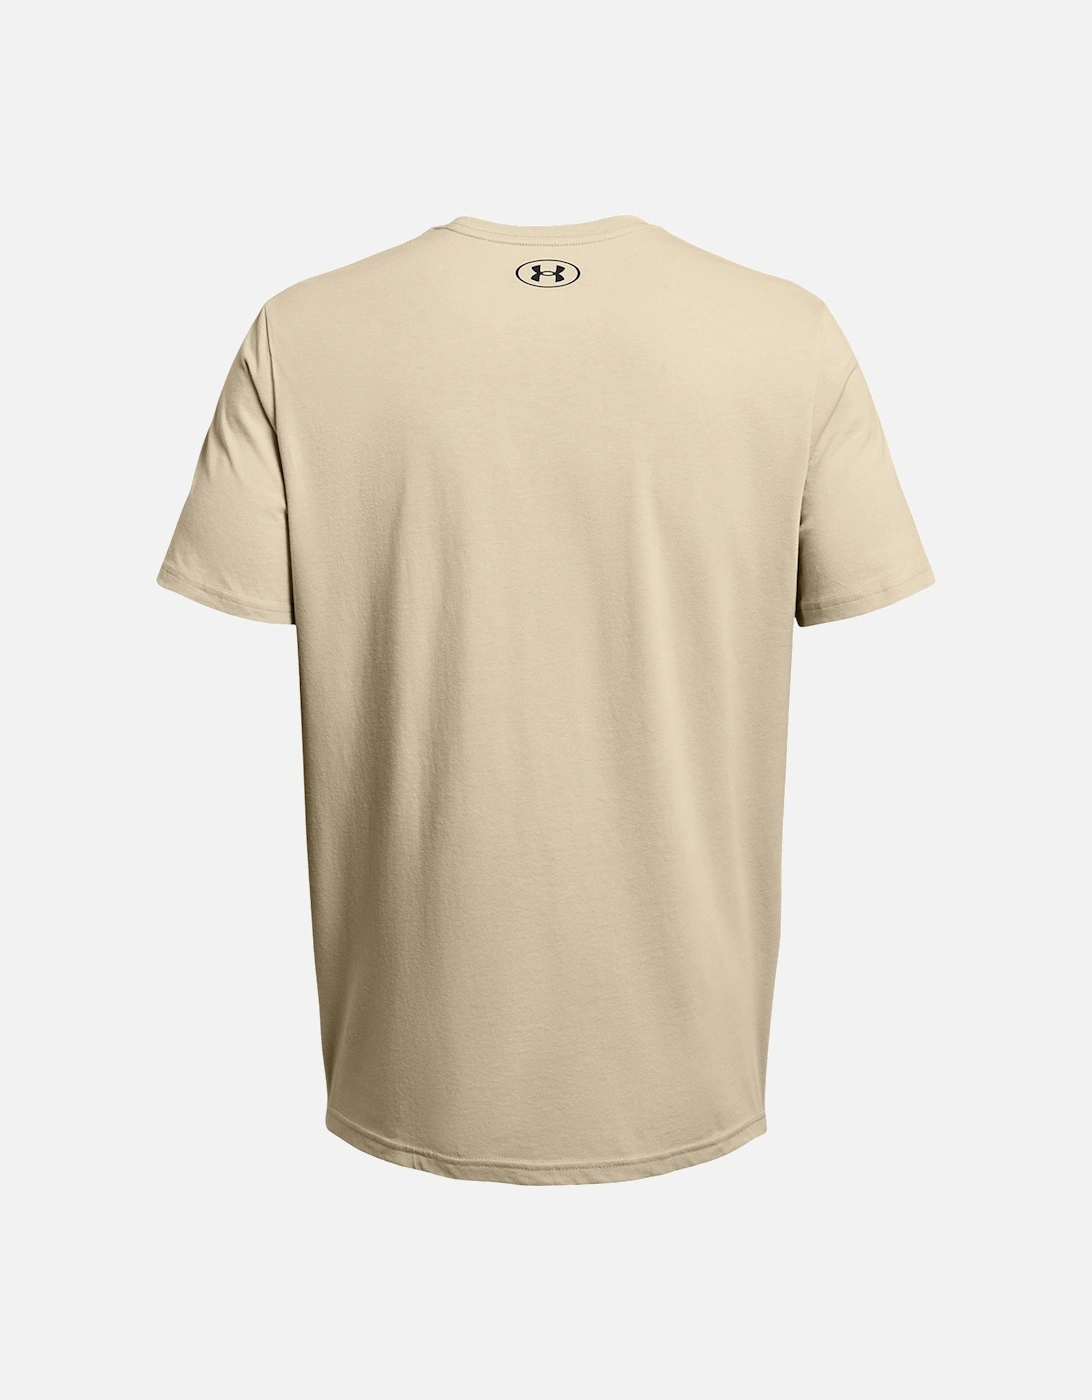 Mens Sportstyle T-Shirt (Sand)